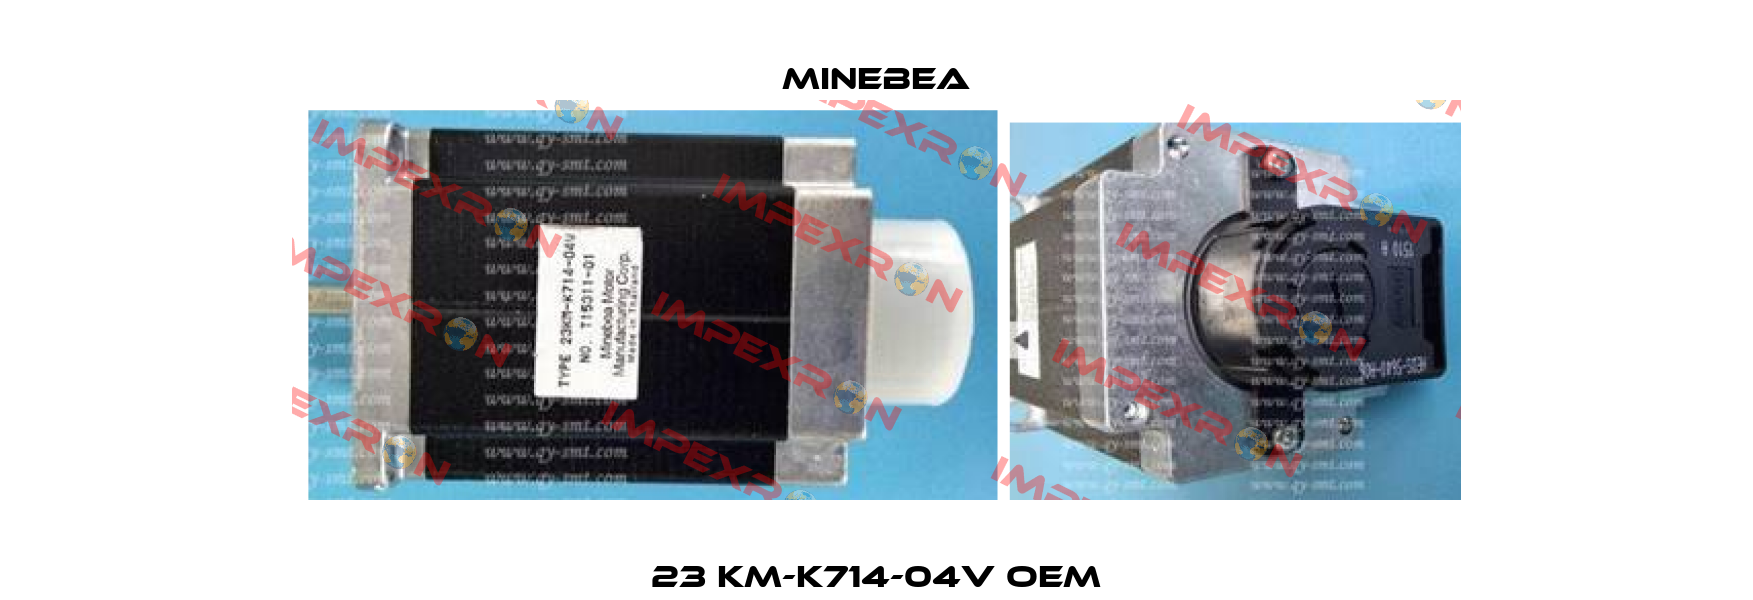 23 KM-K714-04V OEM Minebea